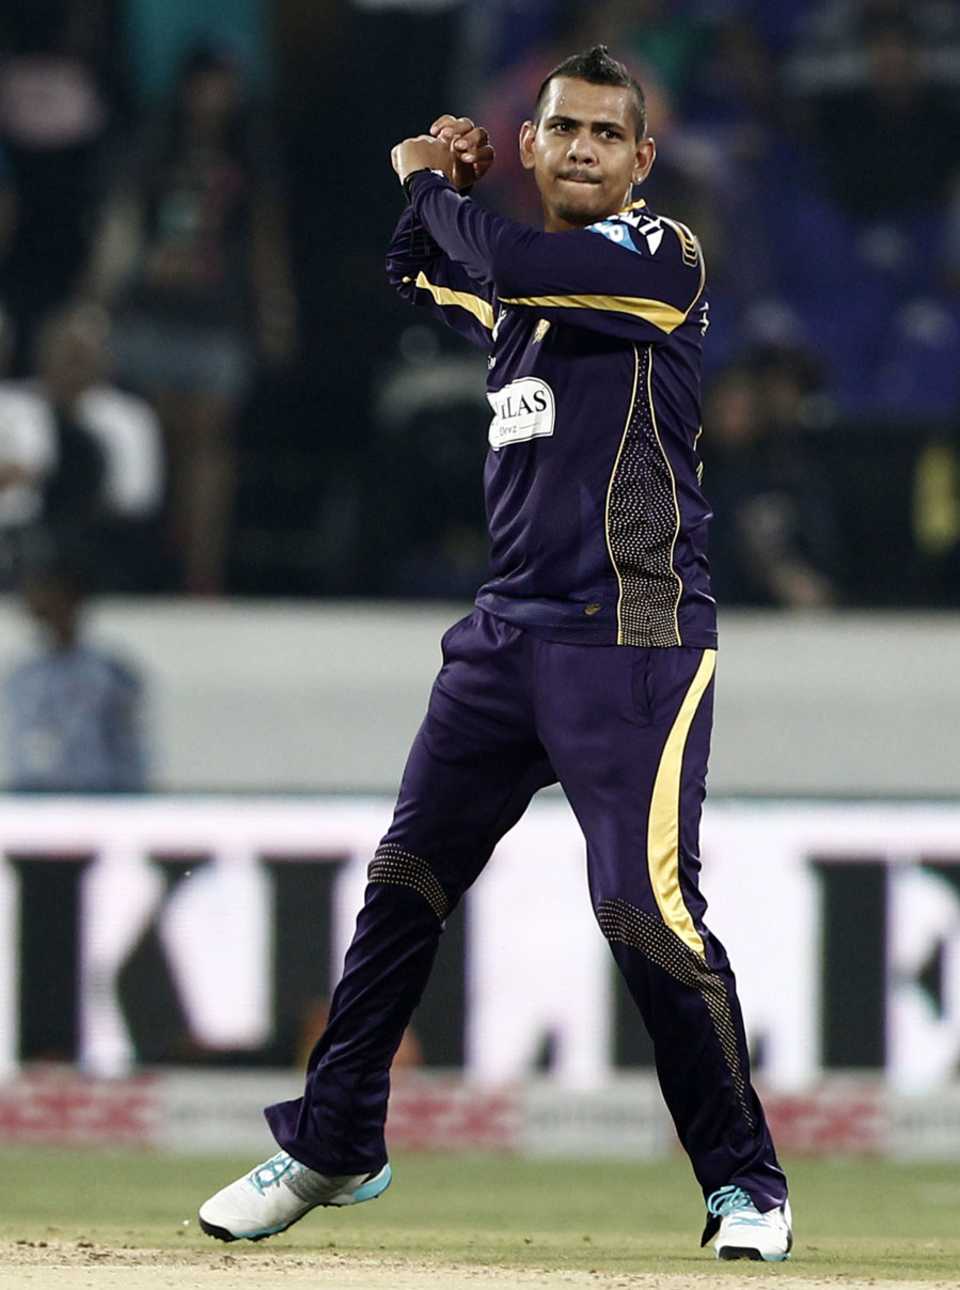 Sunil Narine bamboozled the Lahore Lions batsmen